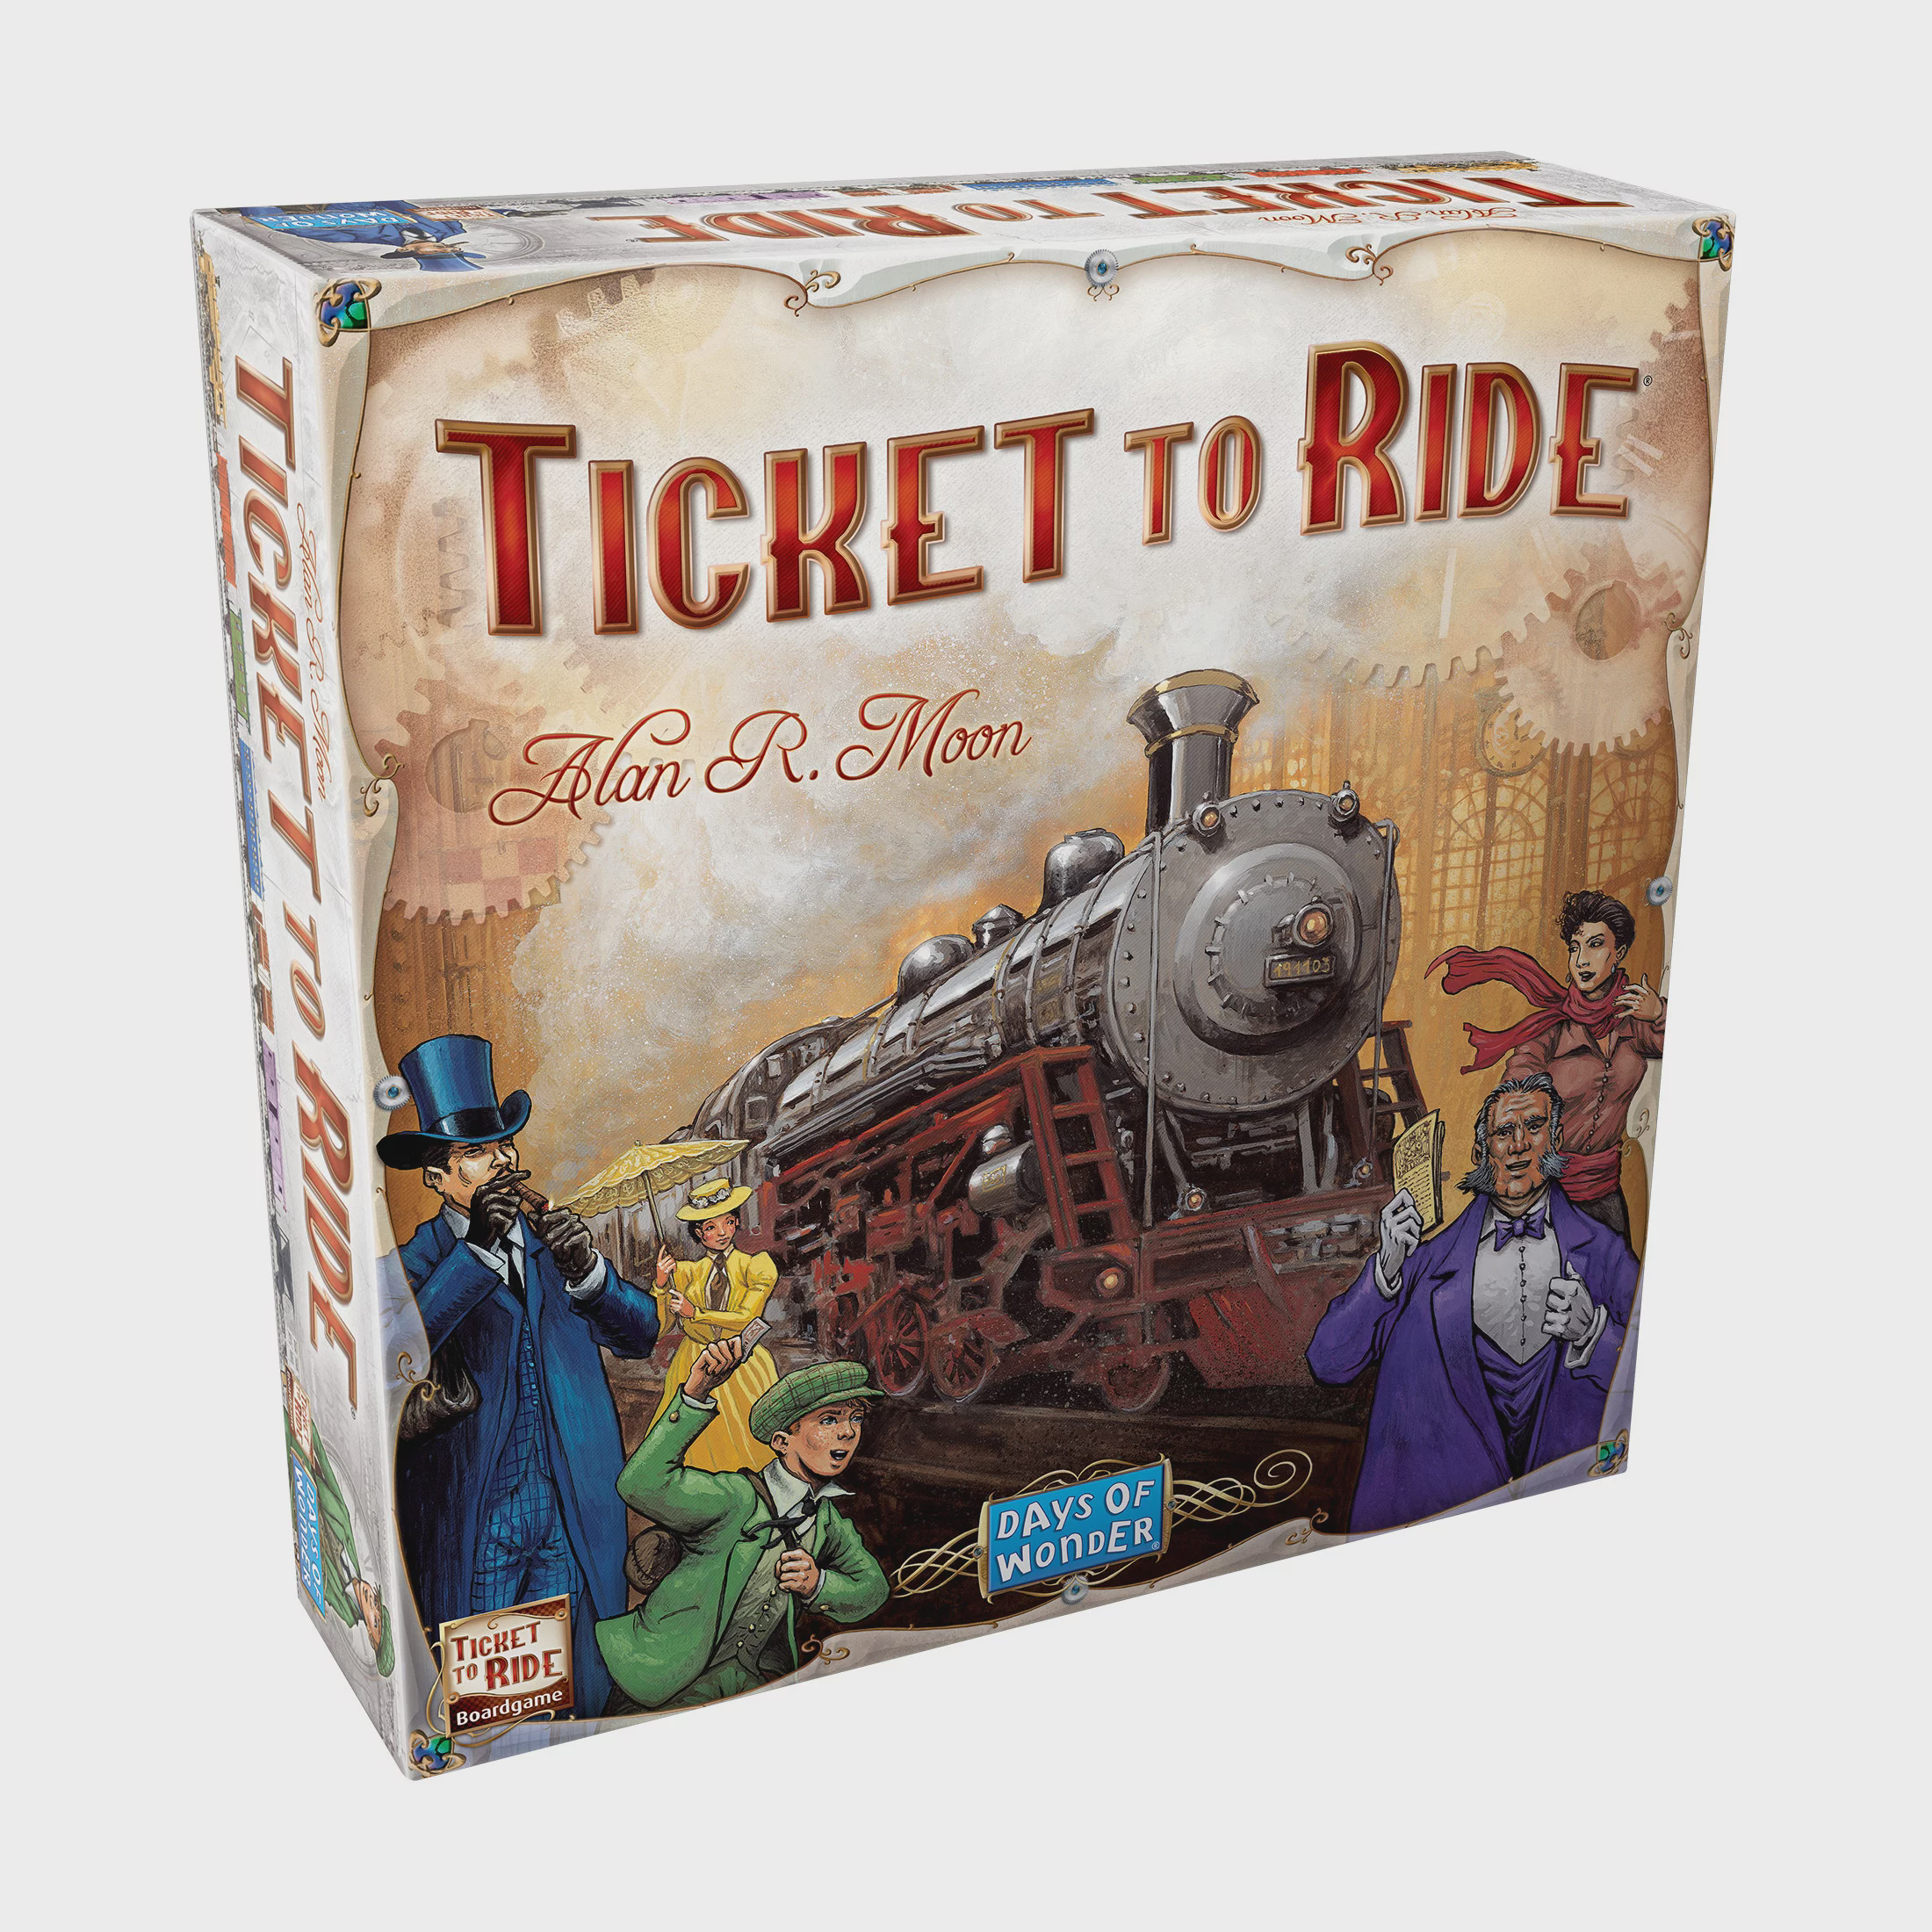 Ticket to Ride Board Game - $29.97 (Walmart - Starts 11/27)